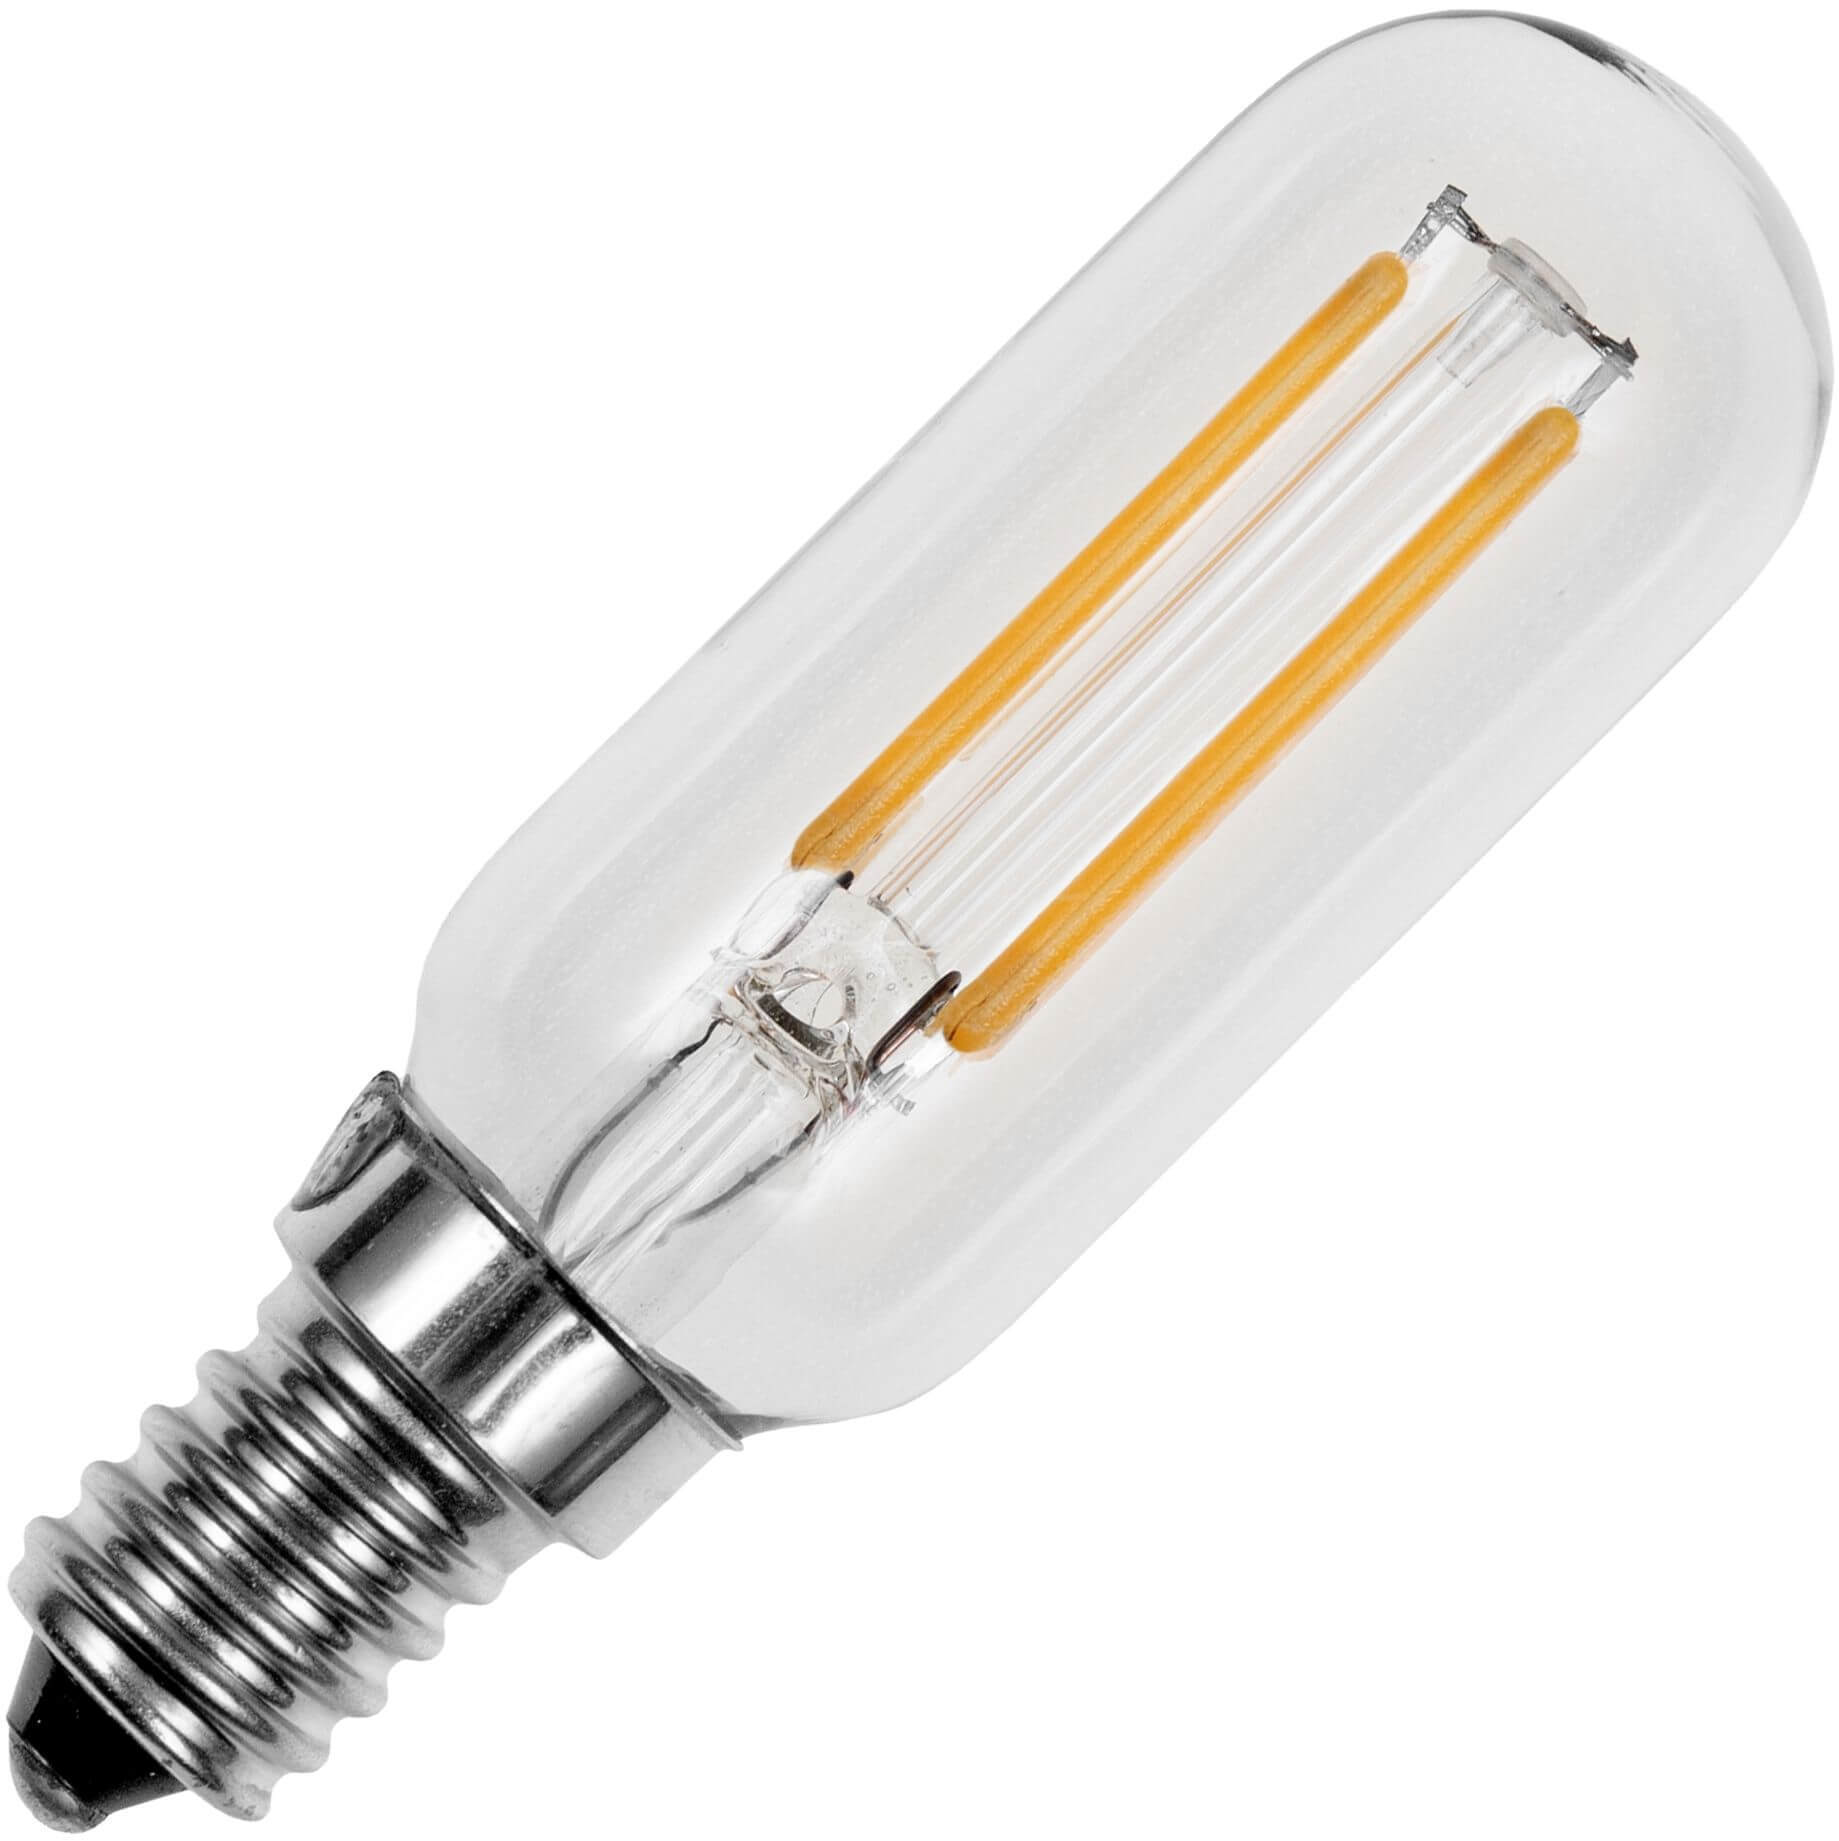 SPL buislamp LED filament 1,5W (vervangt 15W) kleine fitting E14